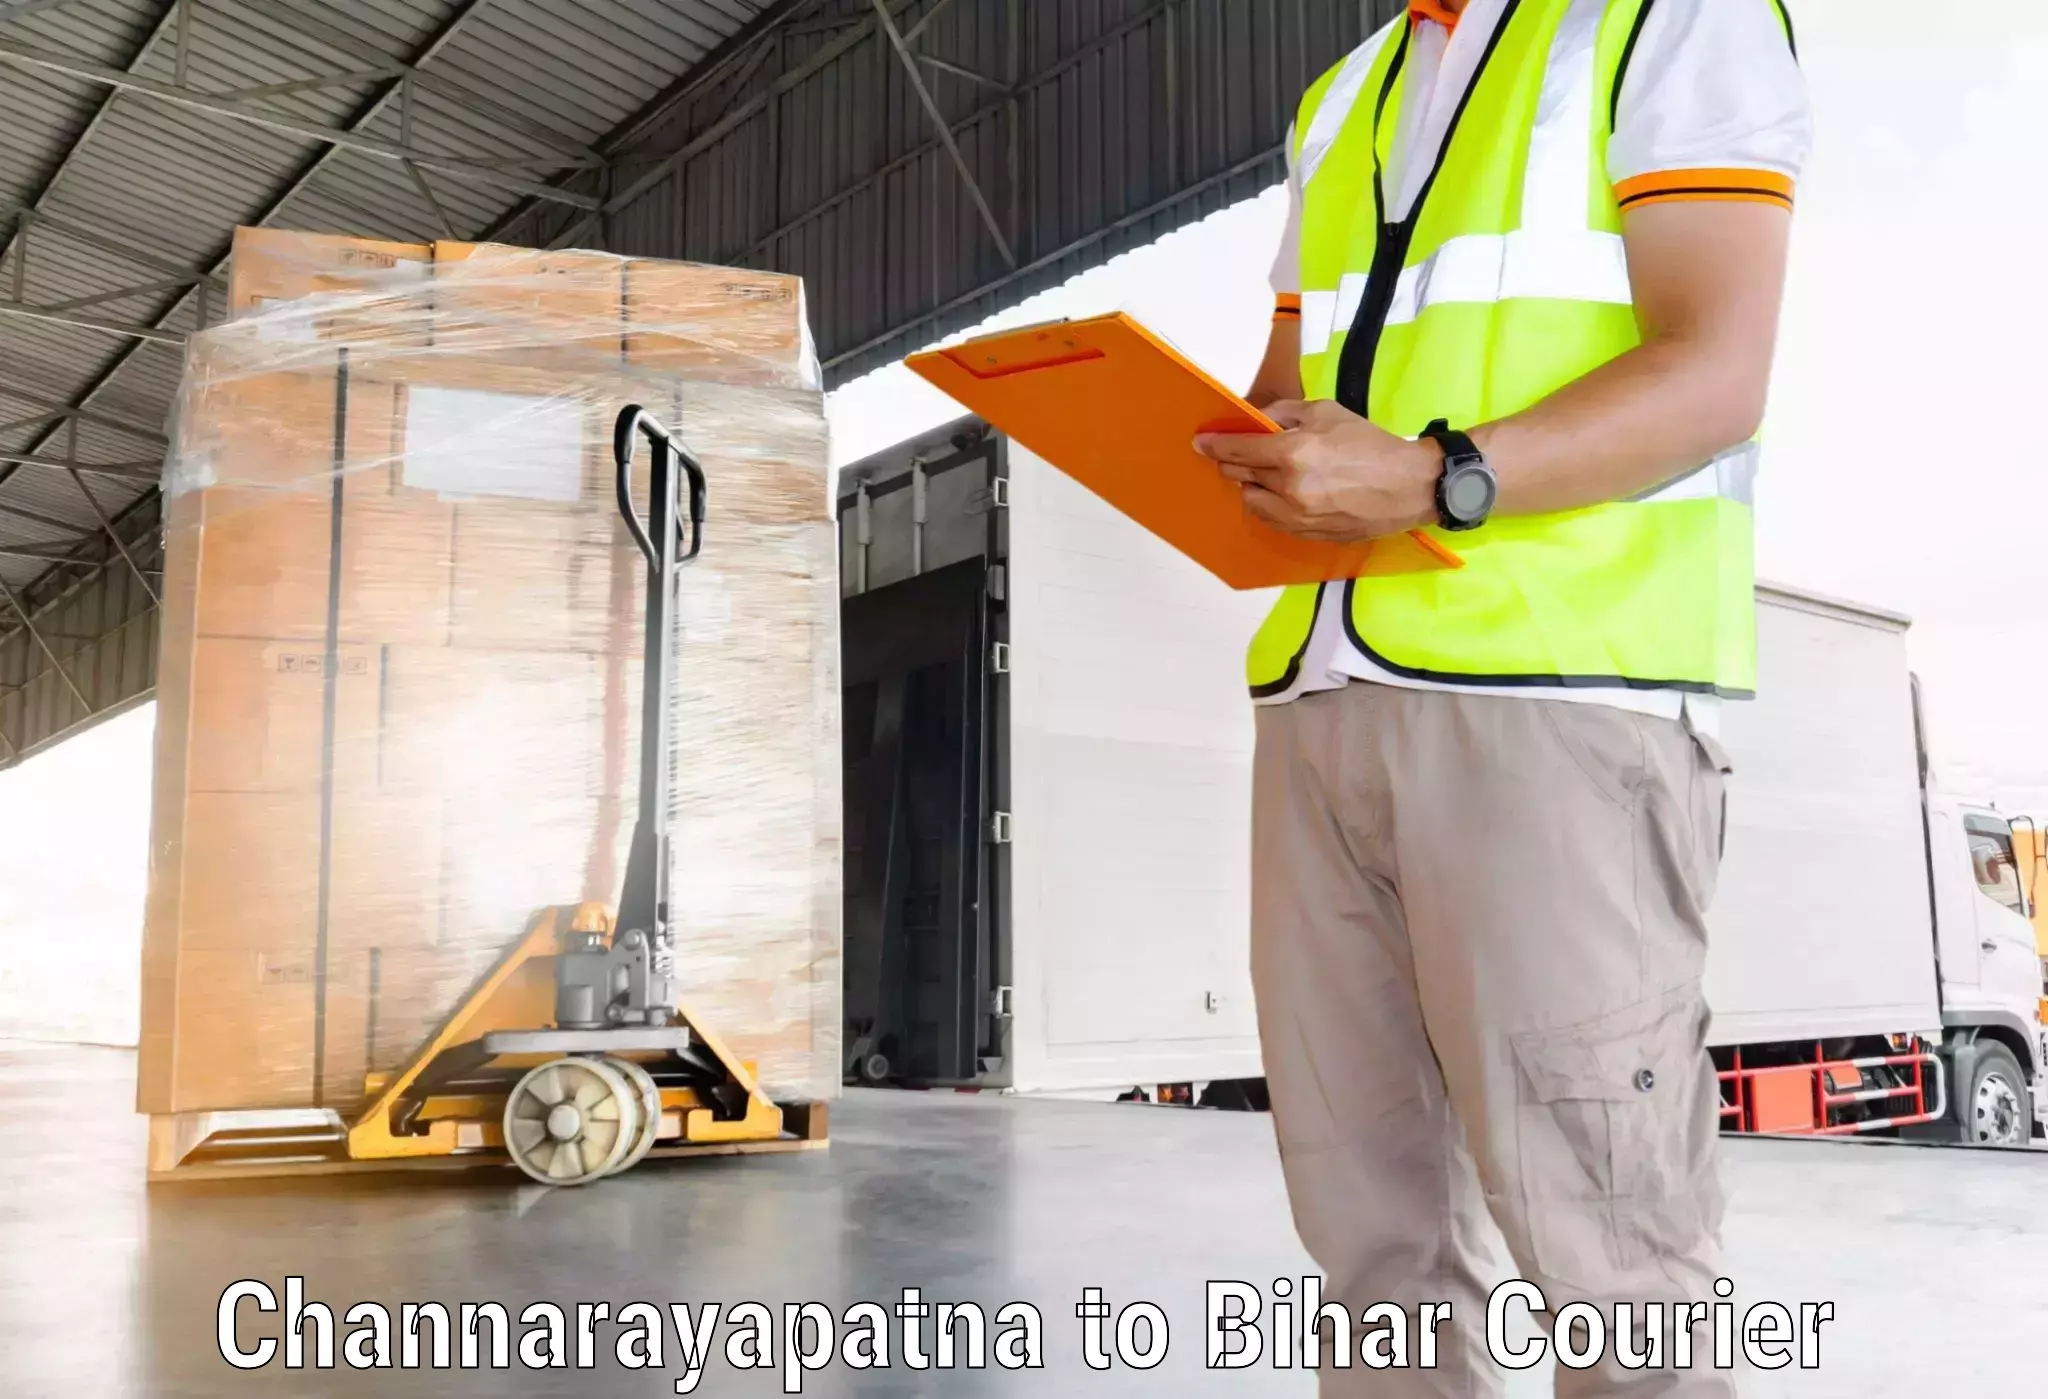 Urgent courier needs in Channarayapatna to Patna